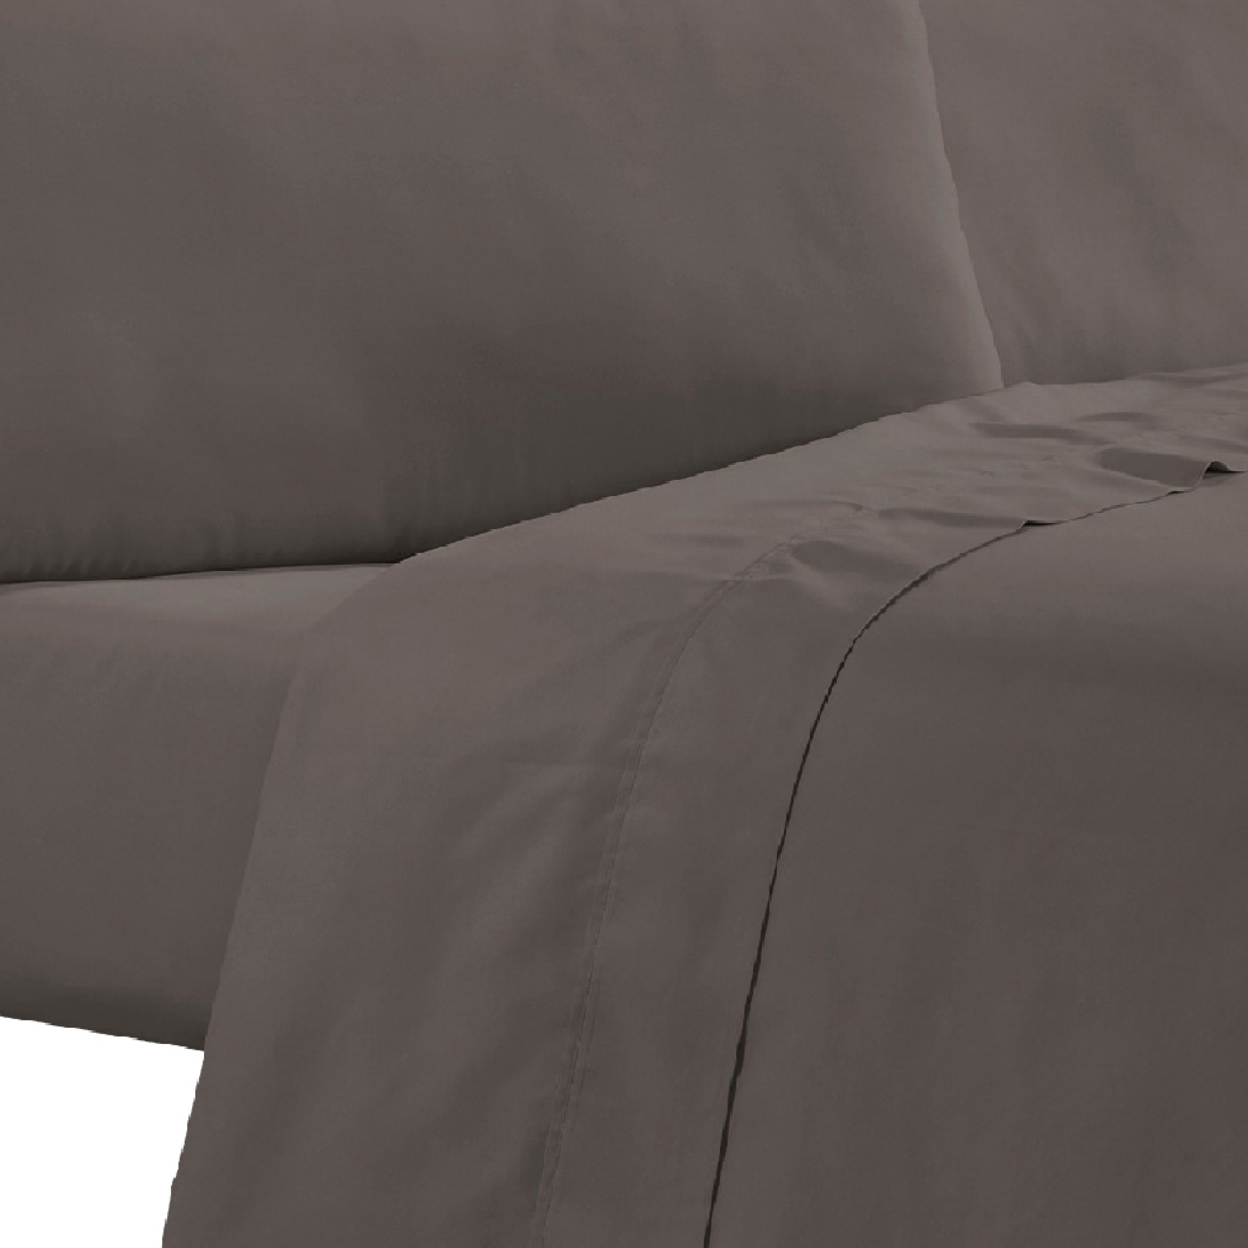 Minka 6 Piece Full Bed Sheet Set, Soft Antimicrobial Microfiber, Dark Brown- Saltoro Sherpi